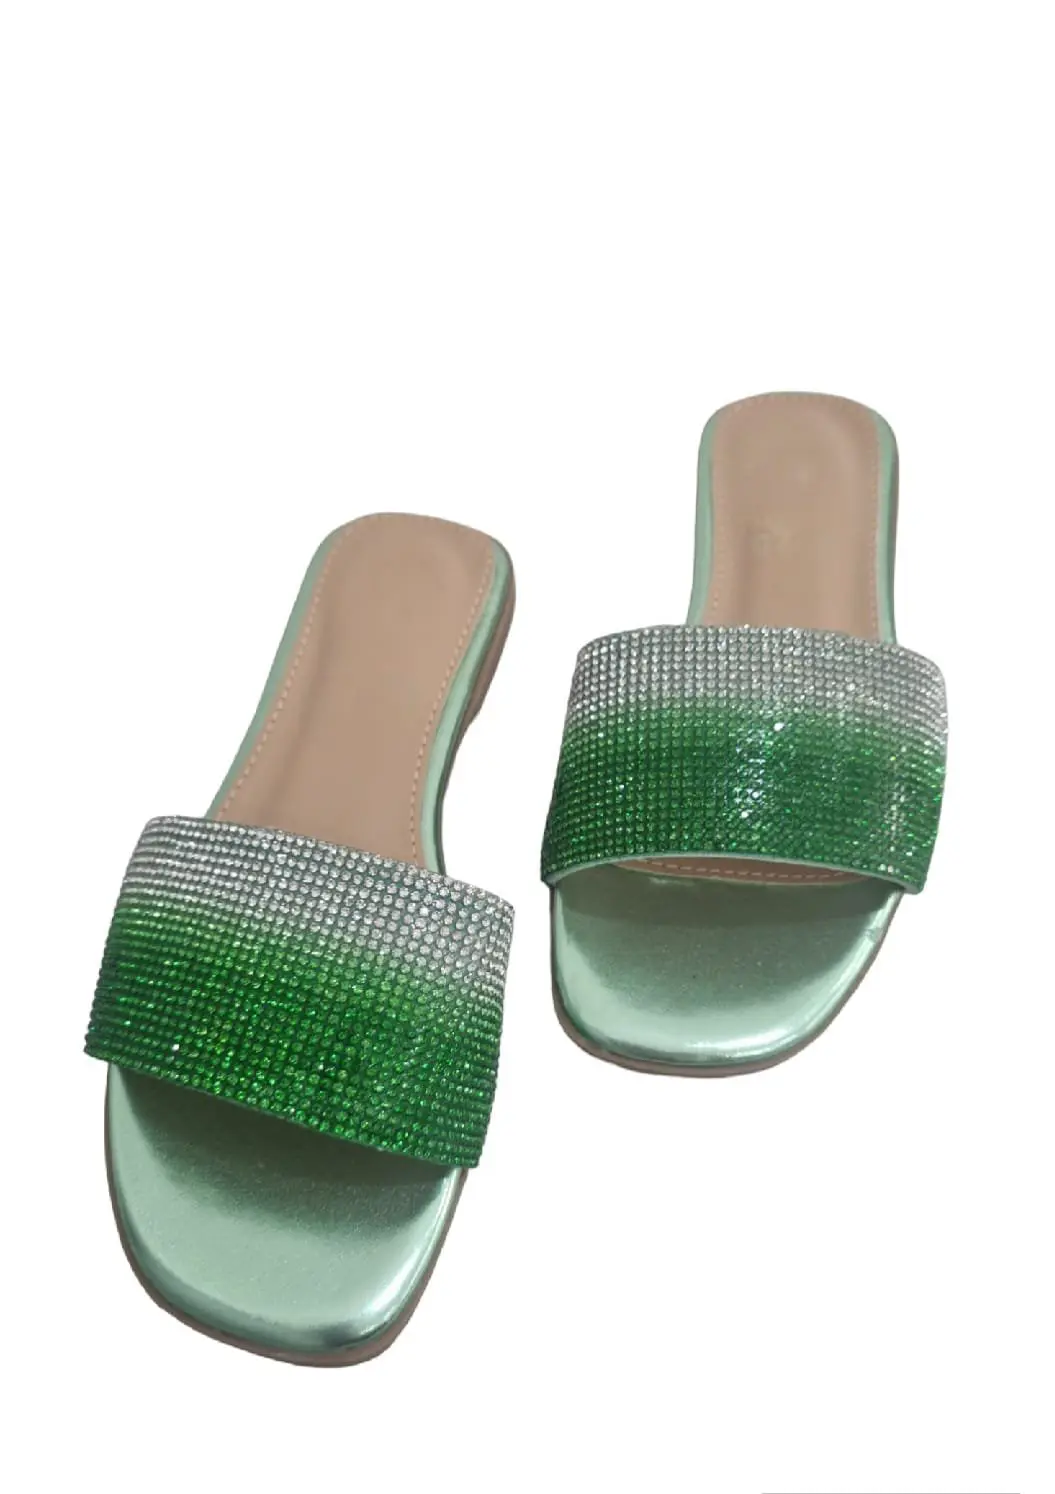 Pantuflas verdes con puntos de luz, tiro 1,5cm, cojín confort.